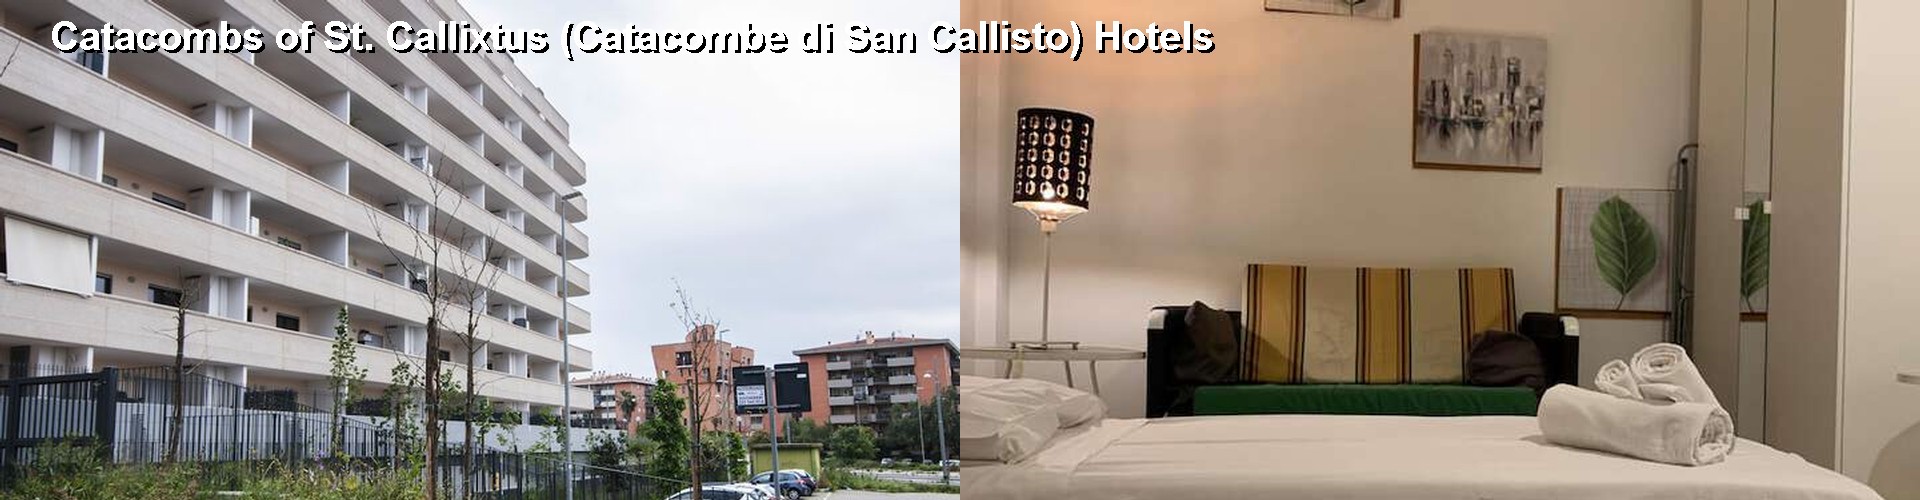 5 Best Hotels near Catacombs of St. Callixtus (Catacombe di San Callisto)